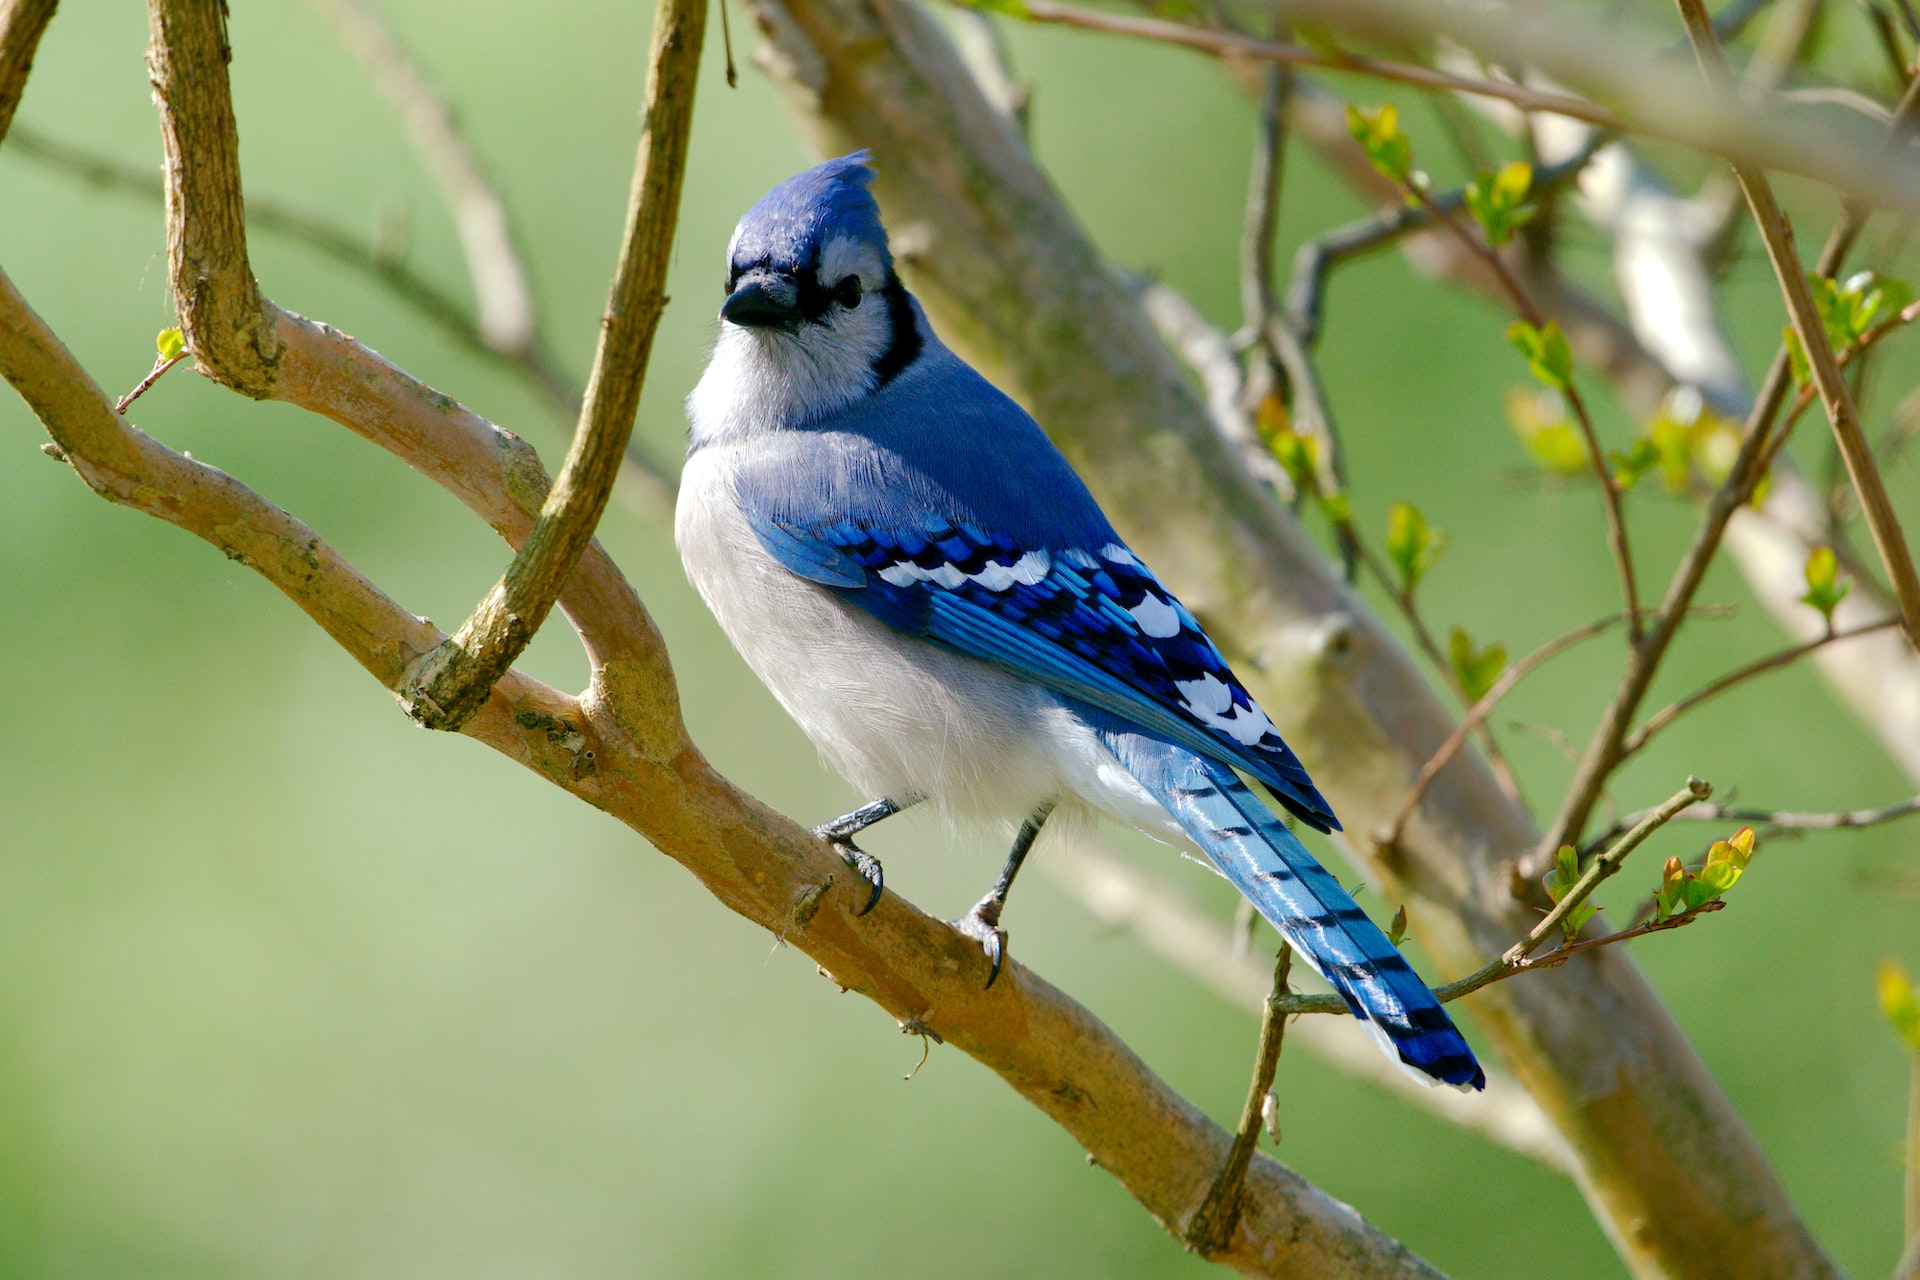 FOR THE BIRDS: Blue jays have an attitude